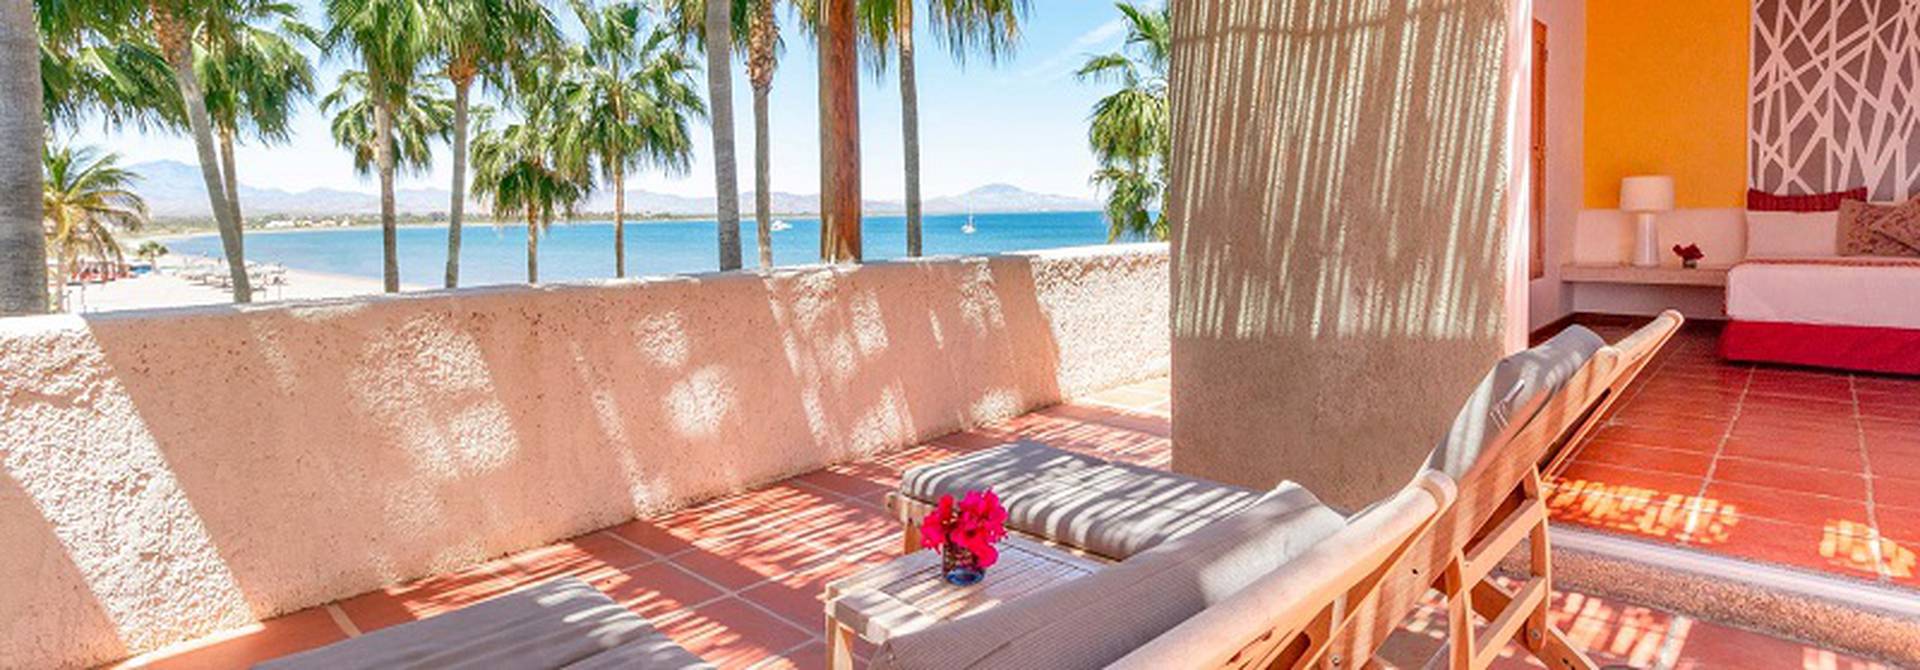 Our best suites Loreto Bay Golf Resort & Spa at Baja Hotel Loreto, Baja California Sur